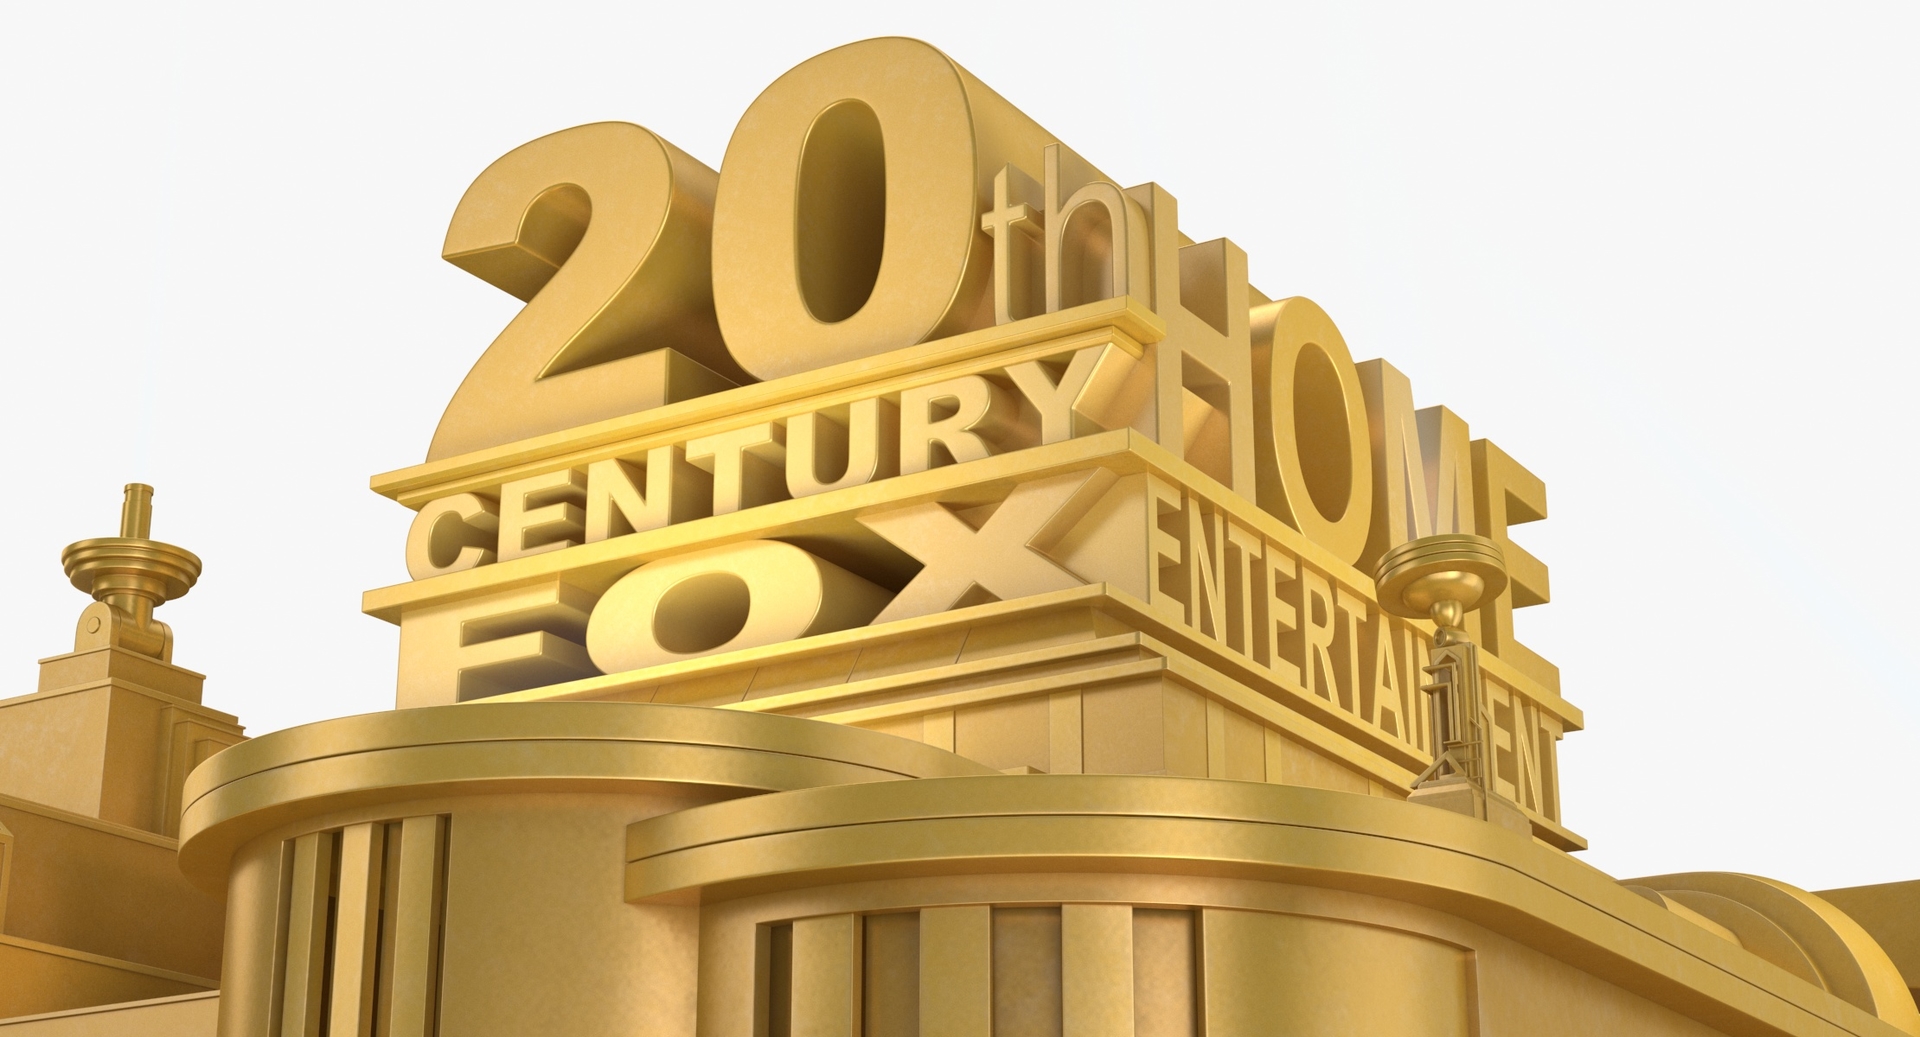 20th fox 3d. Sony 20th Century Fox. 20th Century Fox 3ds. 20th Century Fox logo. 20 Век Фокс Студиос.